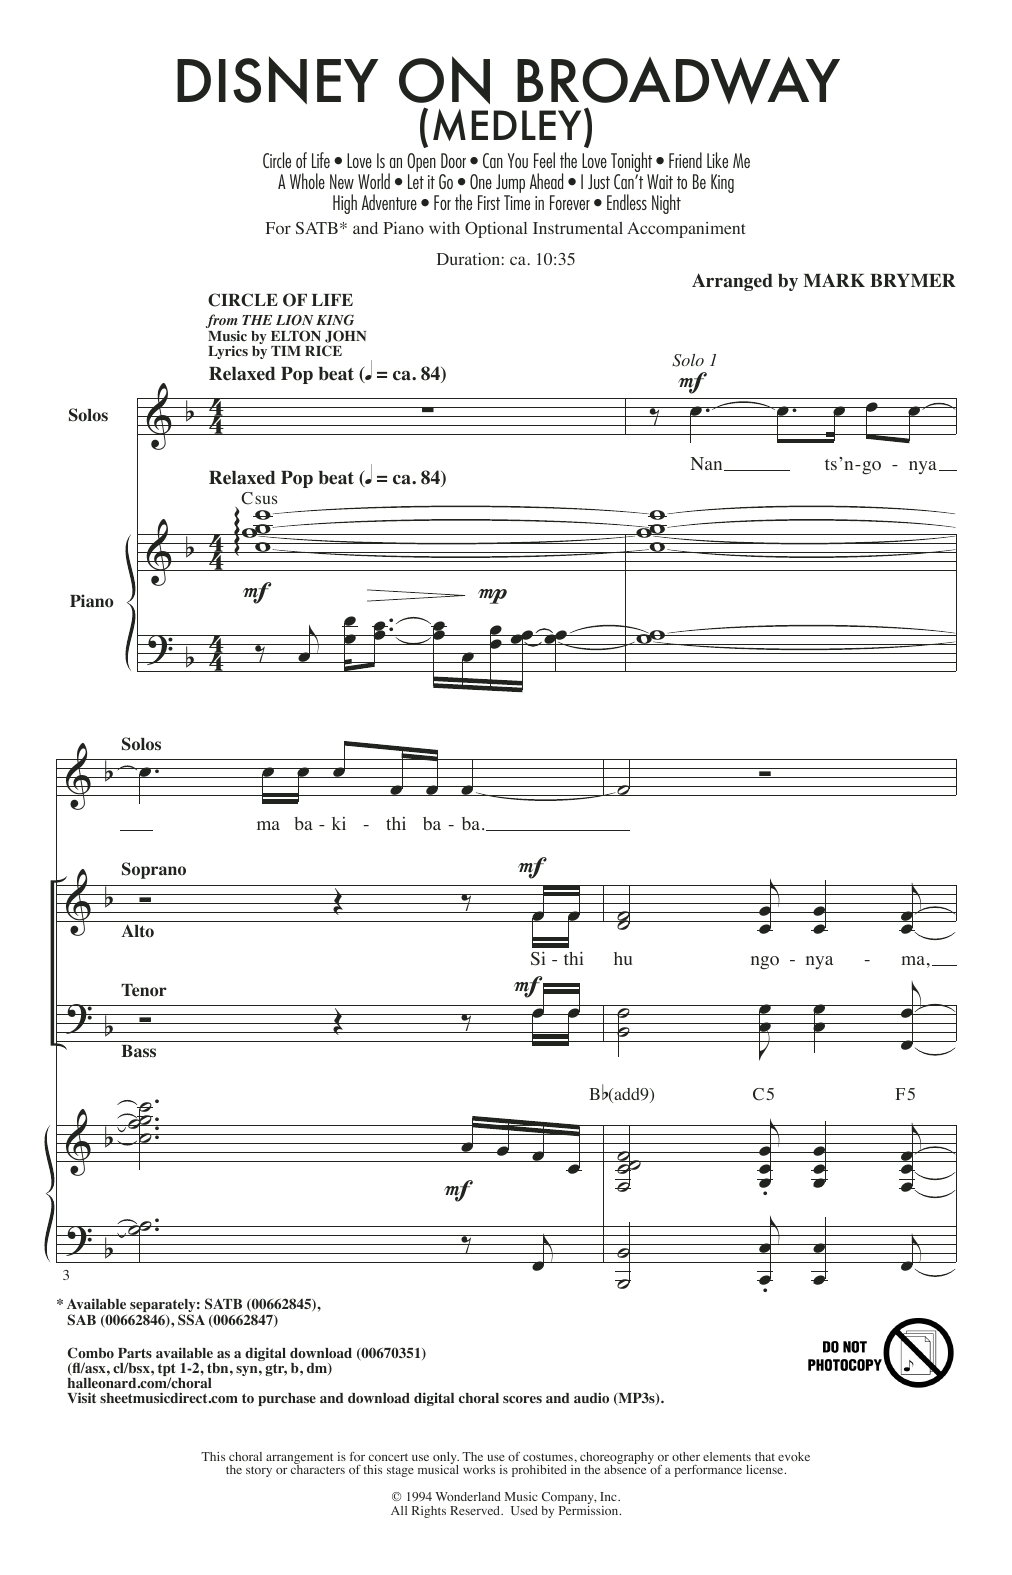 Mark Brymer Disney On Broadway (Medley) Sheet Music Notes & Chords for SATB Choir - Download or Print PDF